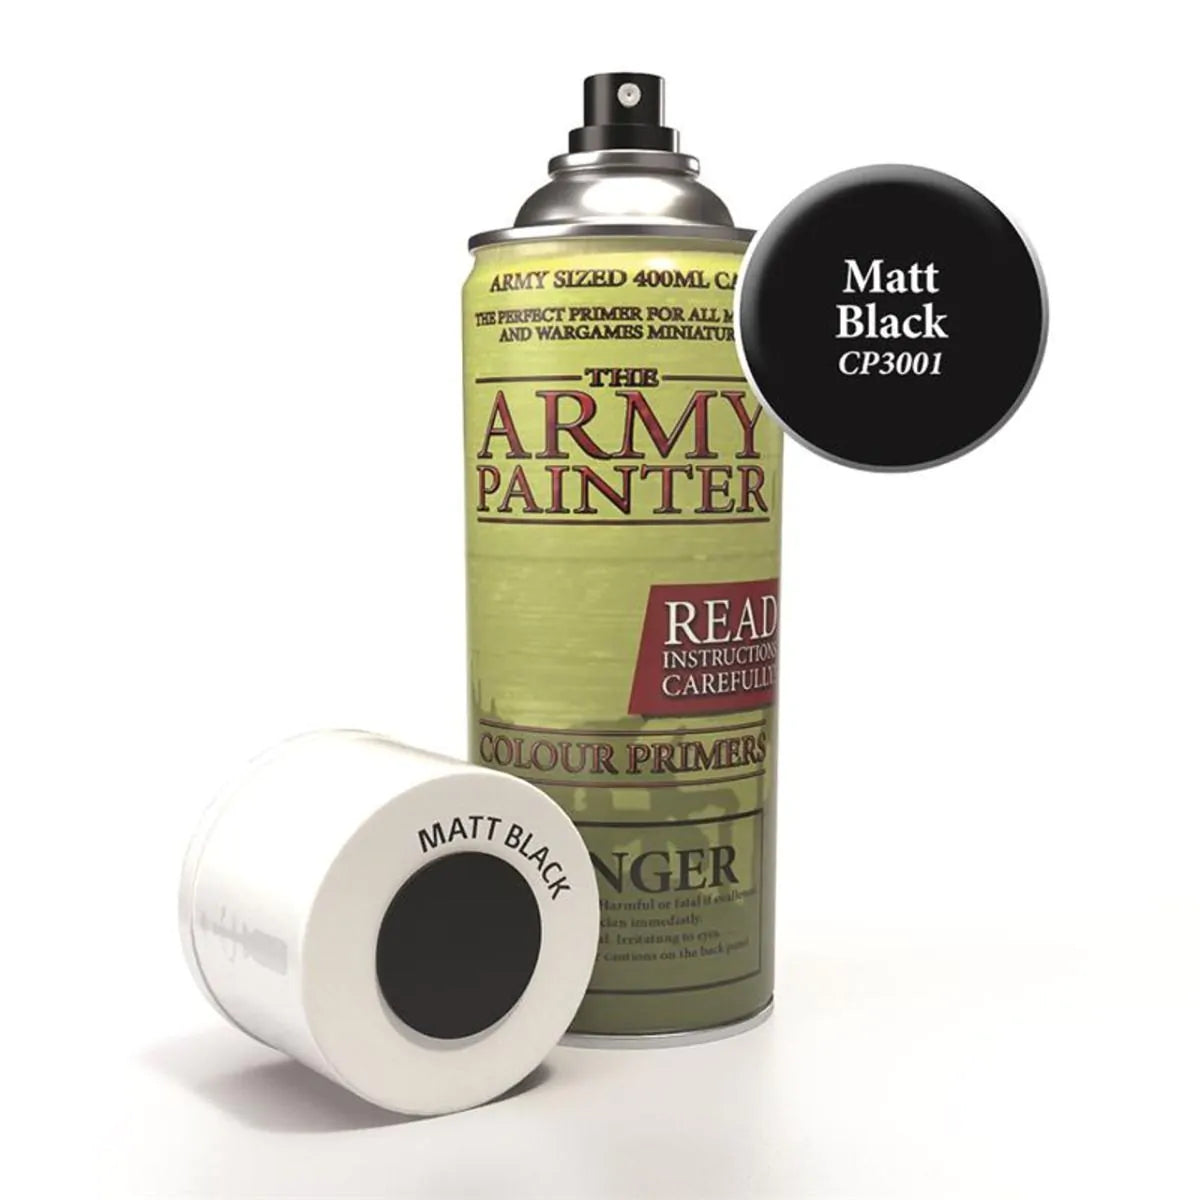 The Army Painter: Matt Primer Black | Gamer Loot